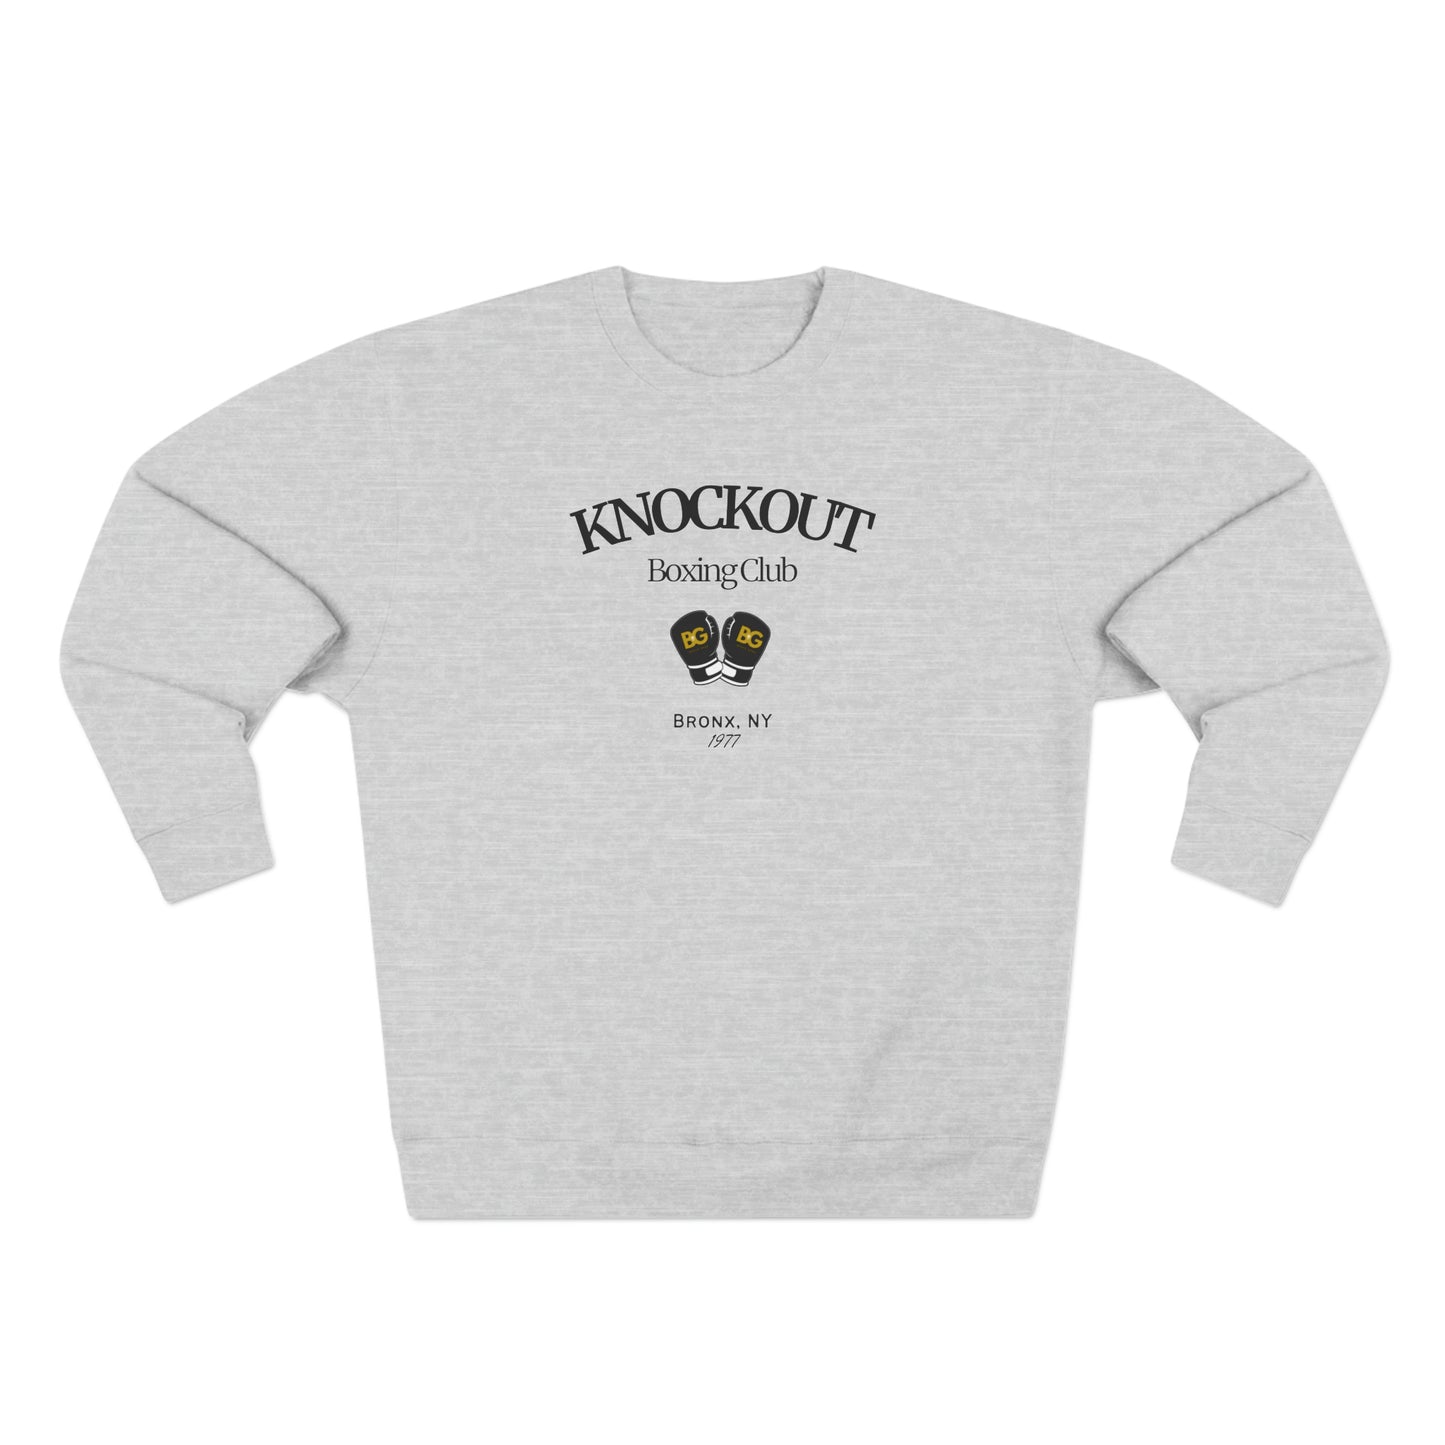 BG "Knockout Boxing Club" Premium Crewneck Sweatshirt